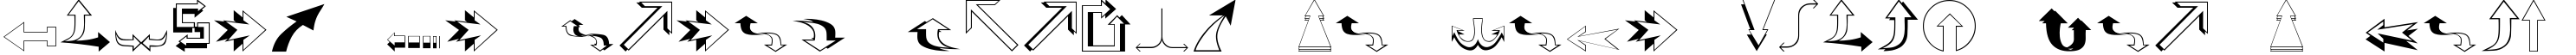 Пример написания шрифтом Arrows2 текста на французском